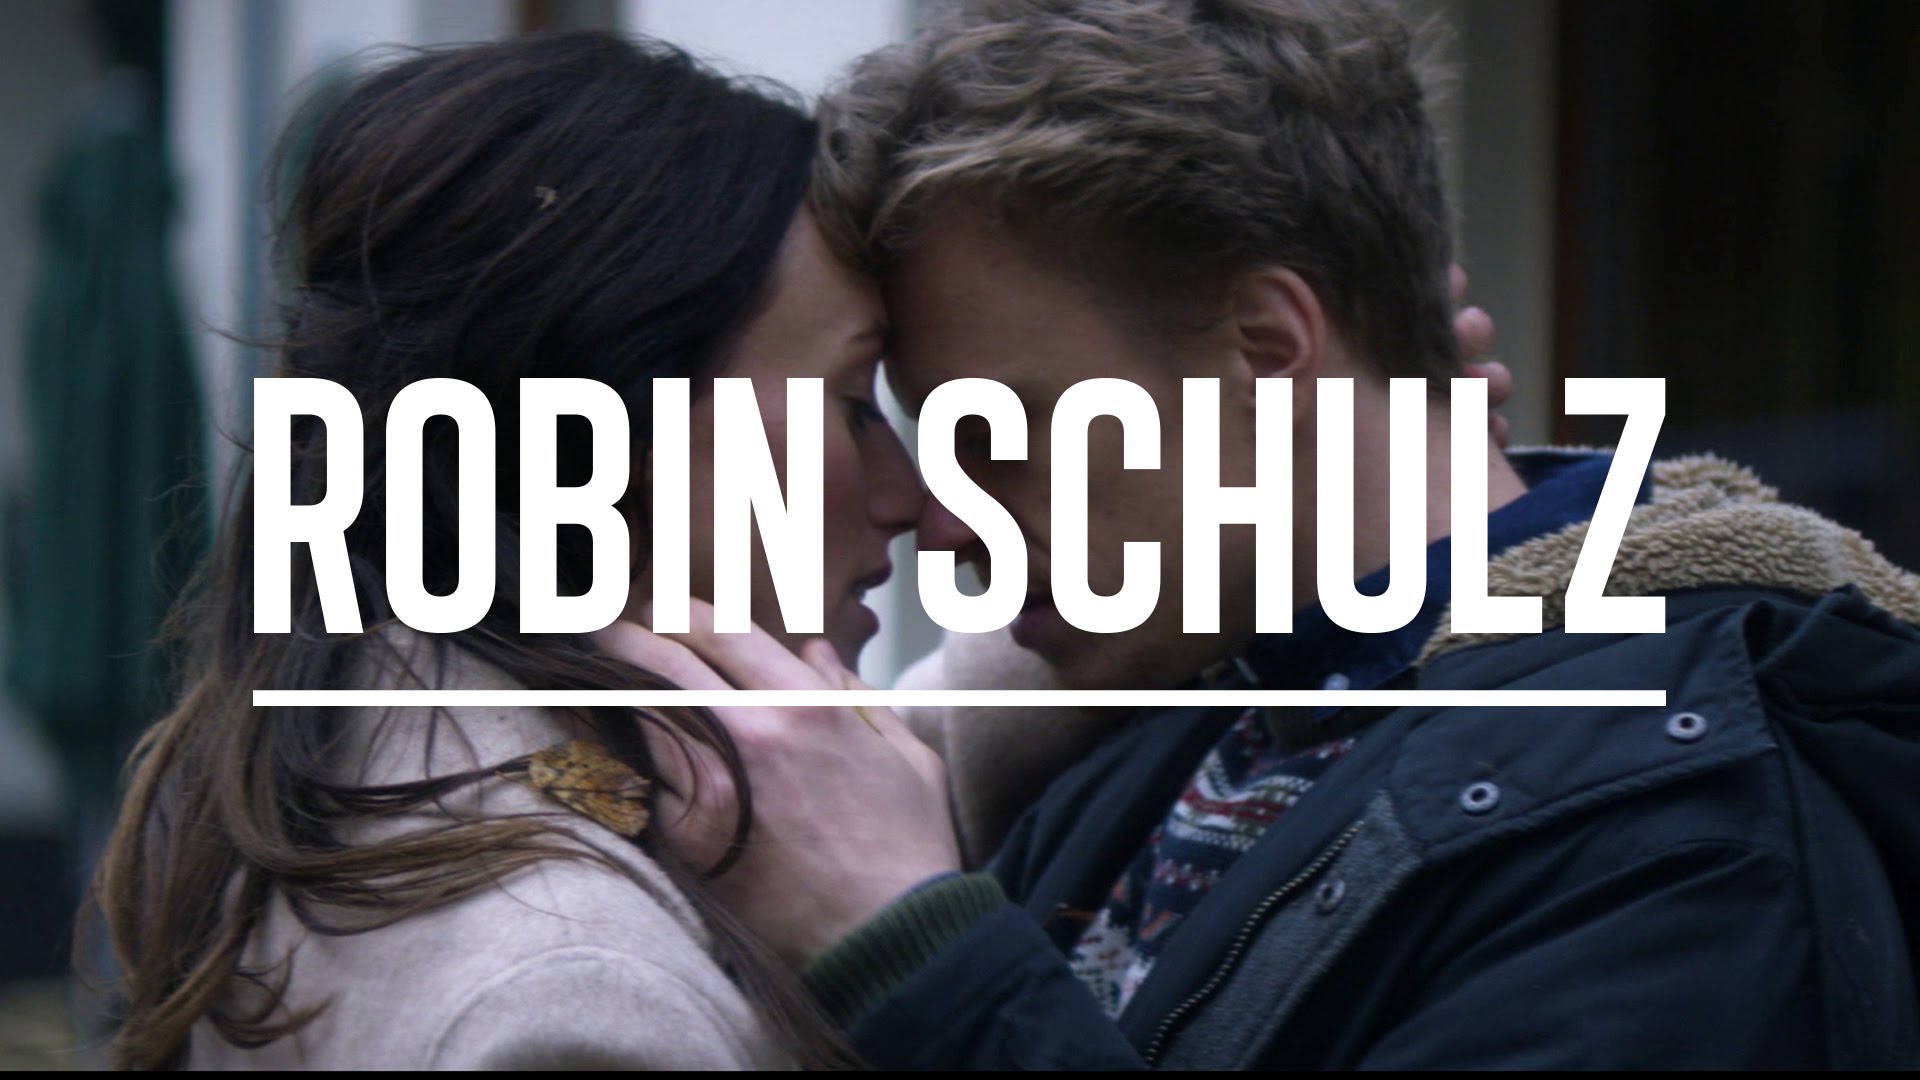 Robin Schulz & Judge - Show Me Love